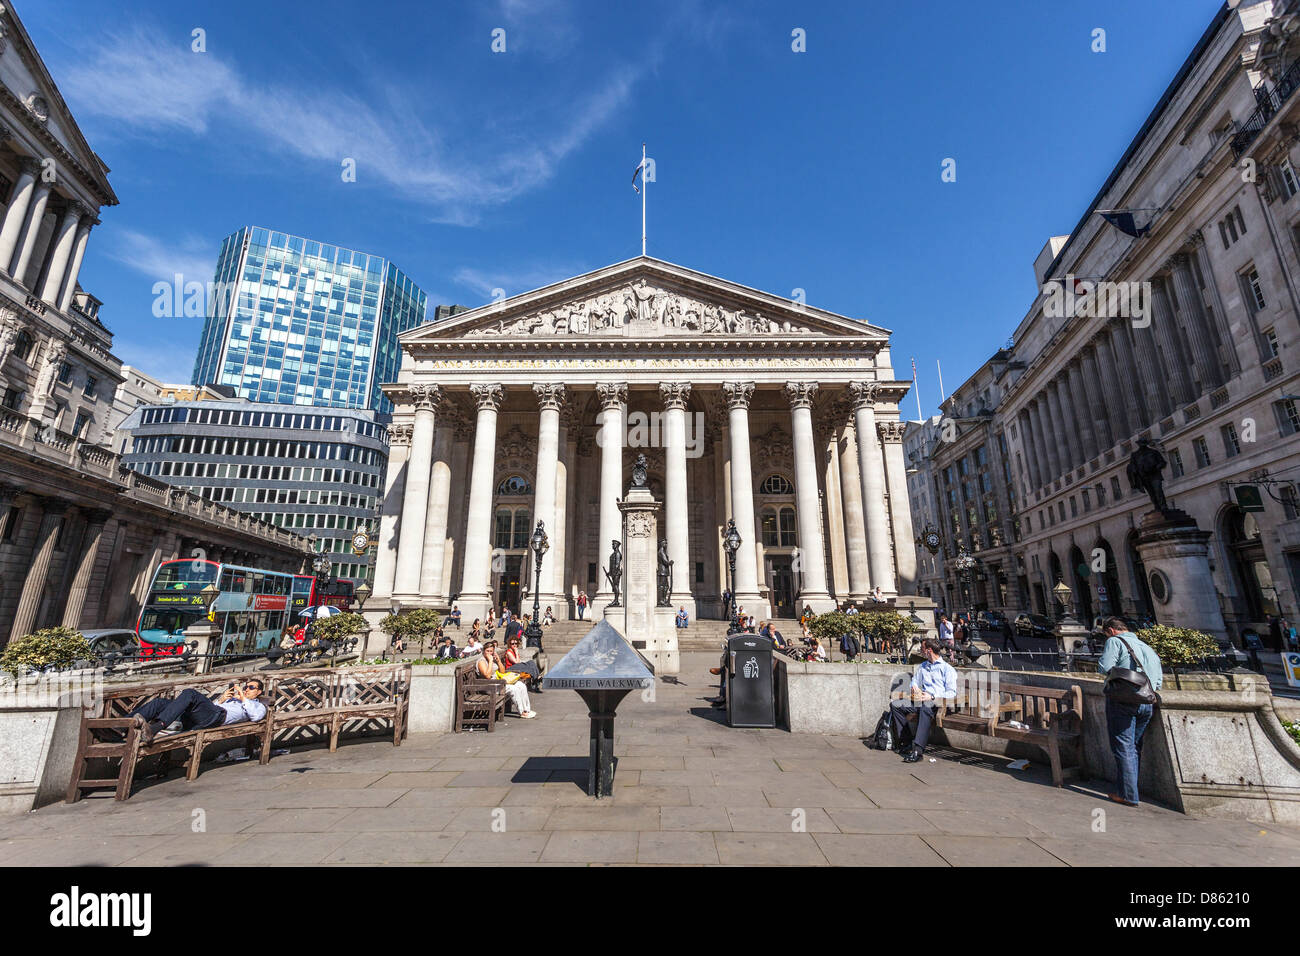 Die Royal Exchange Building, London, England, UK. Stockfoto